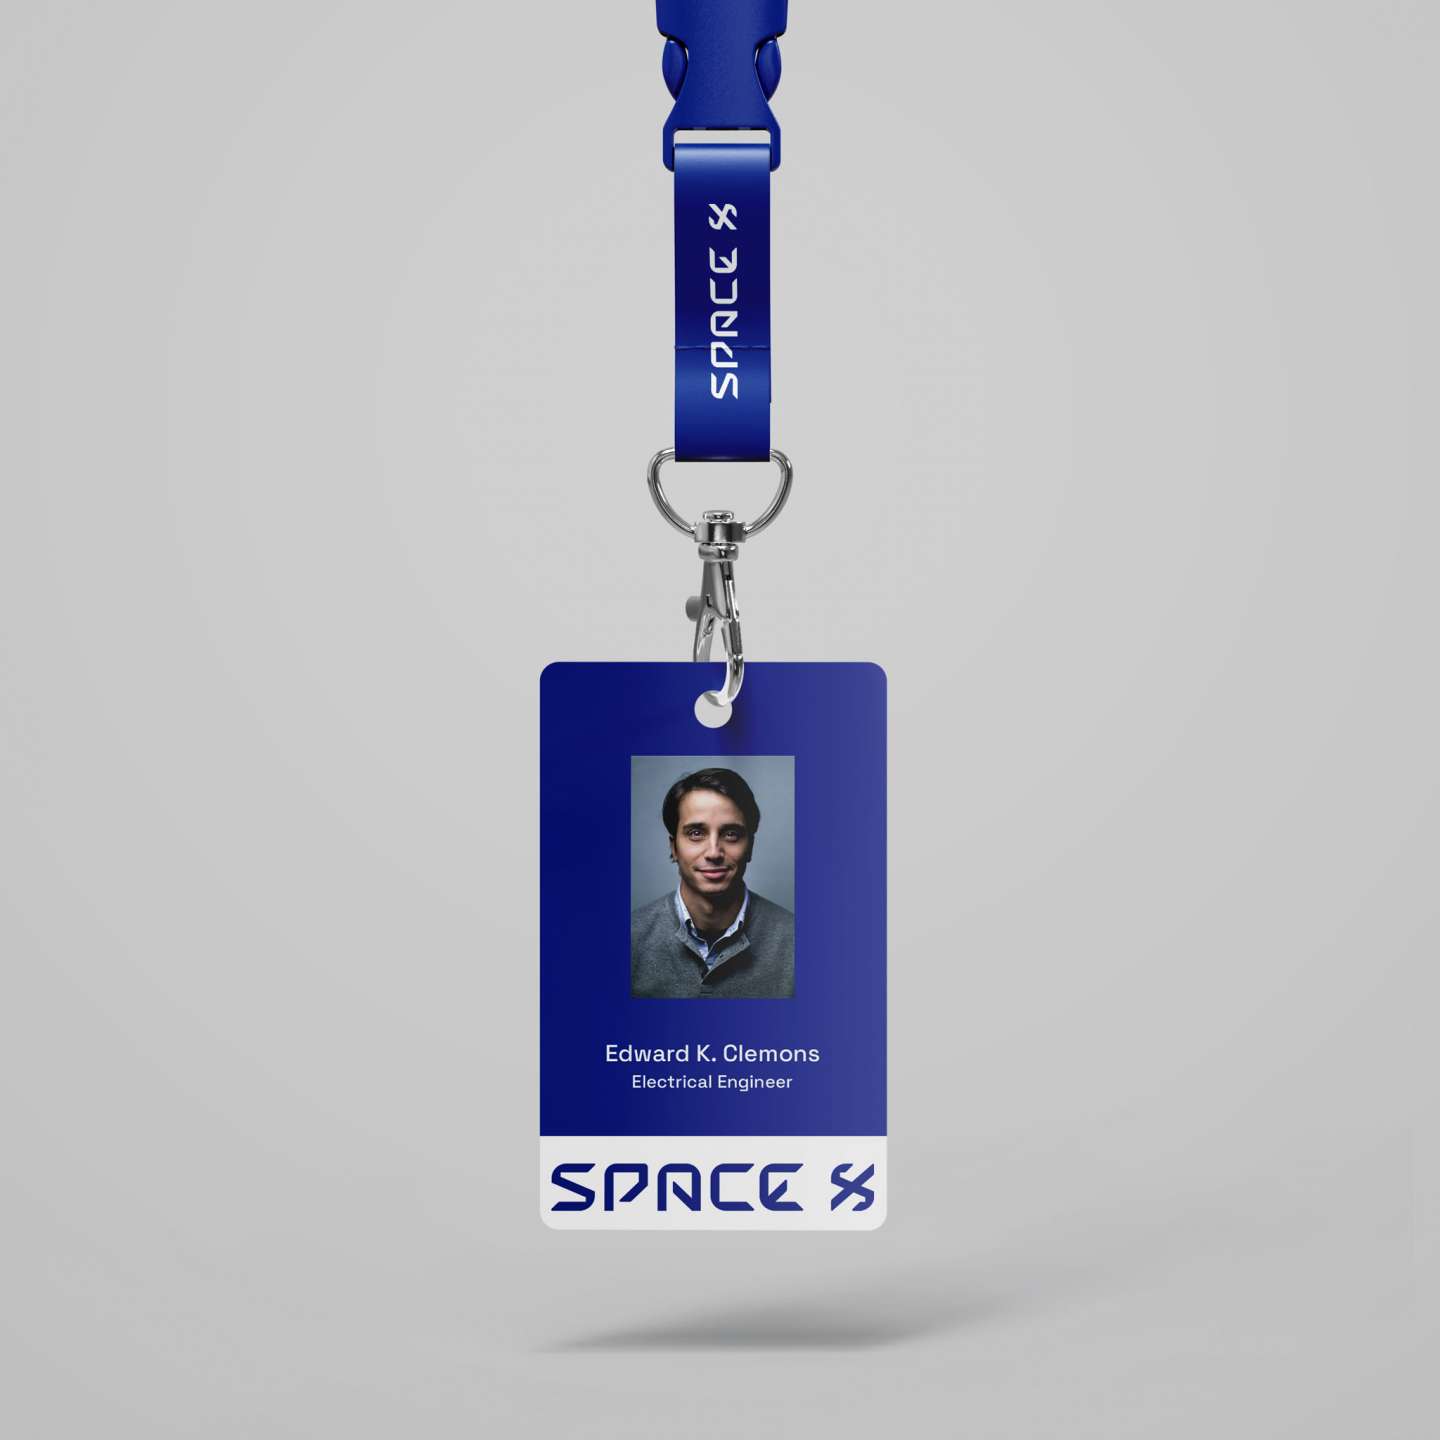 SpaceX Rebranding